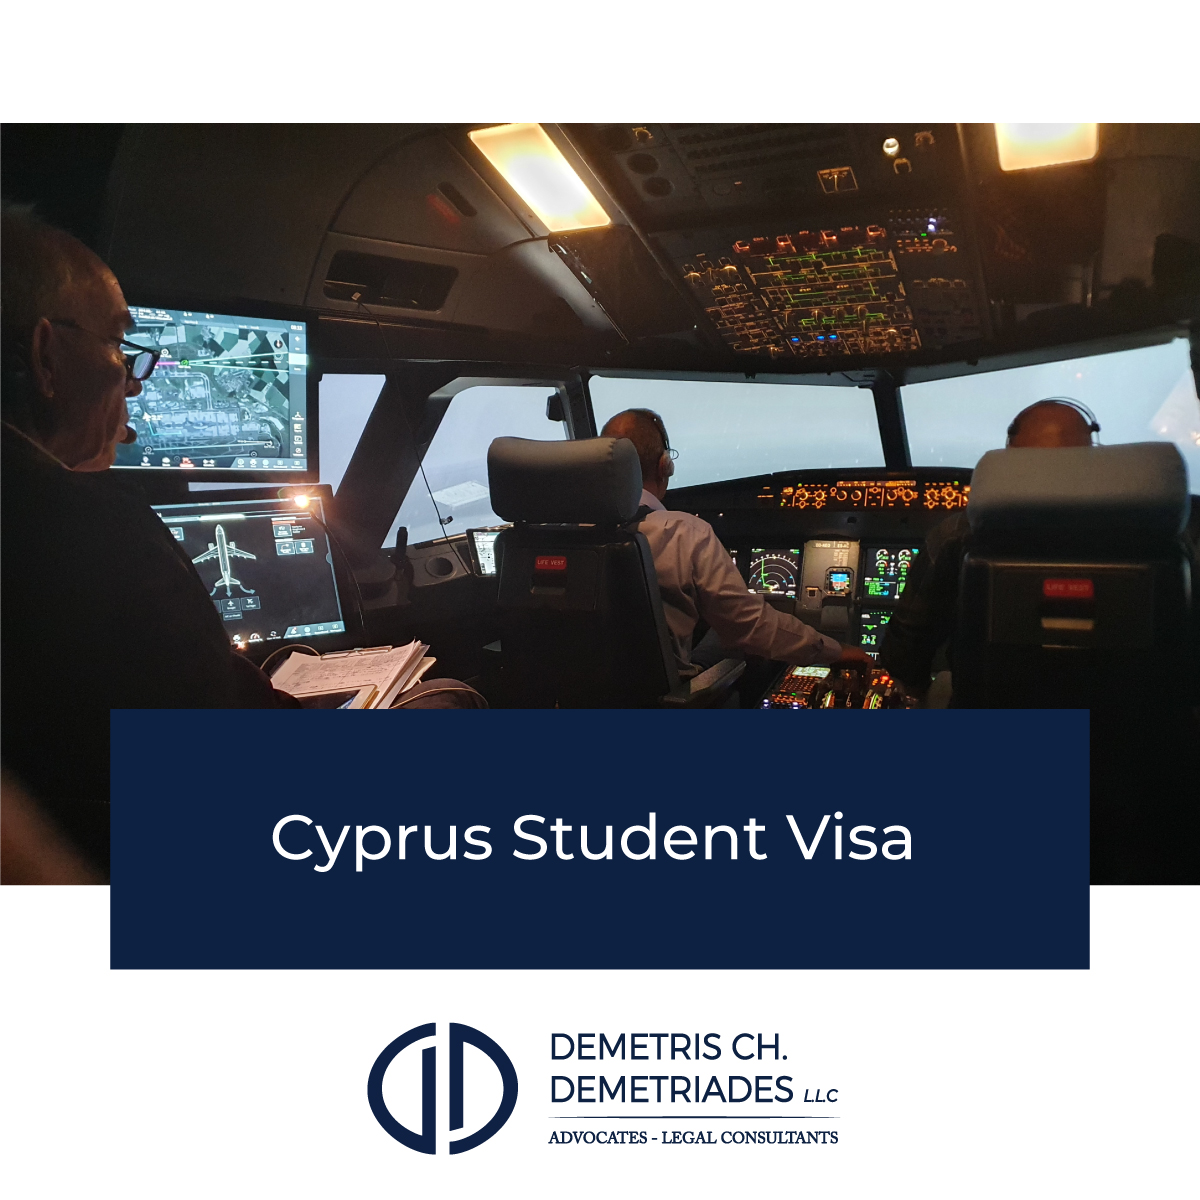 Cyprus Student Visa